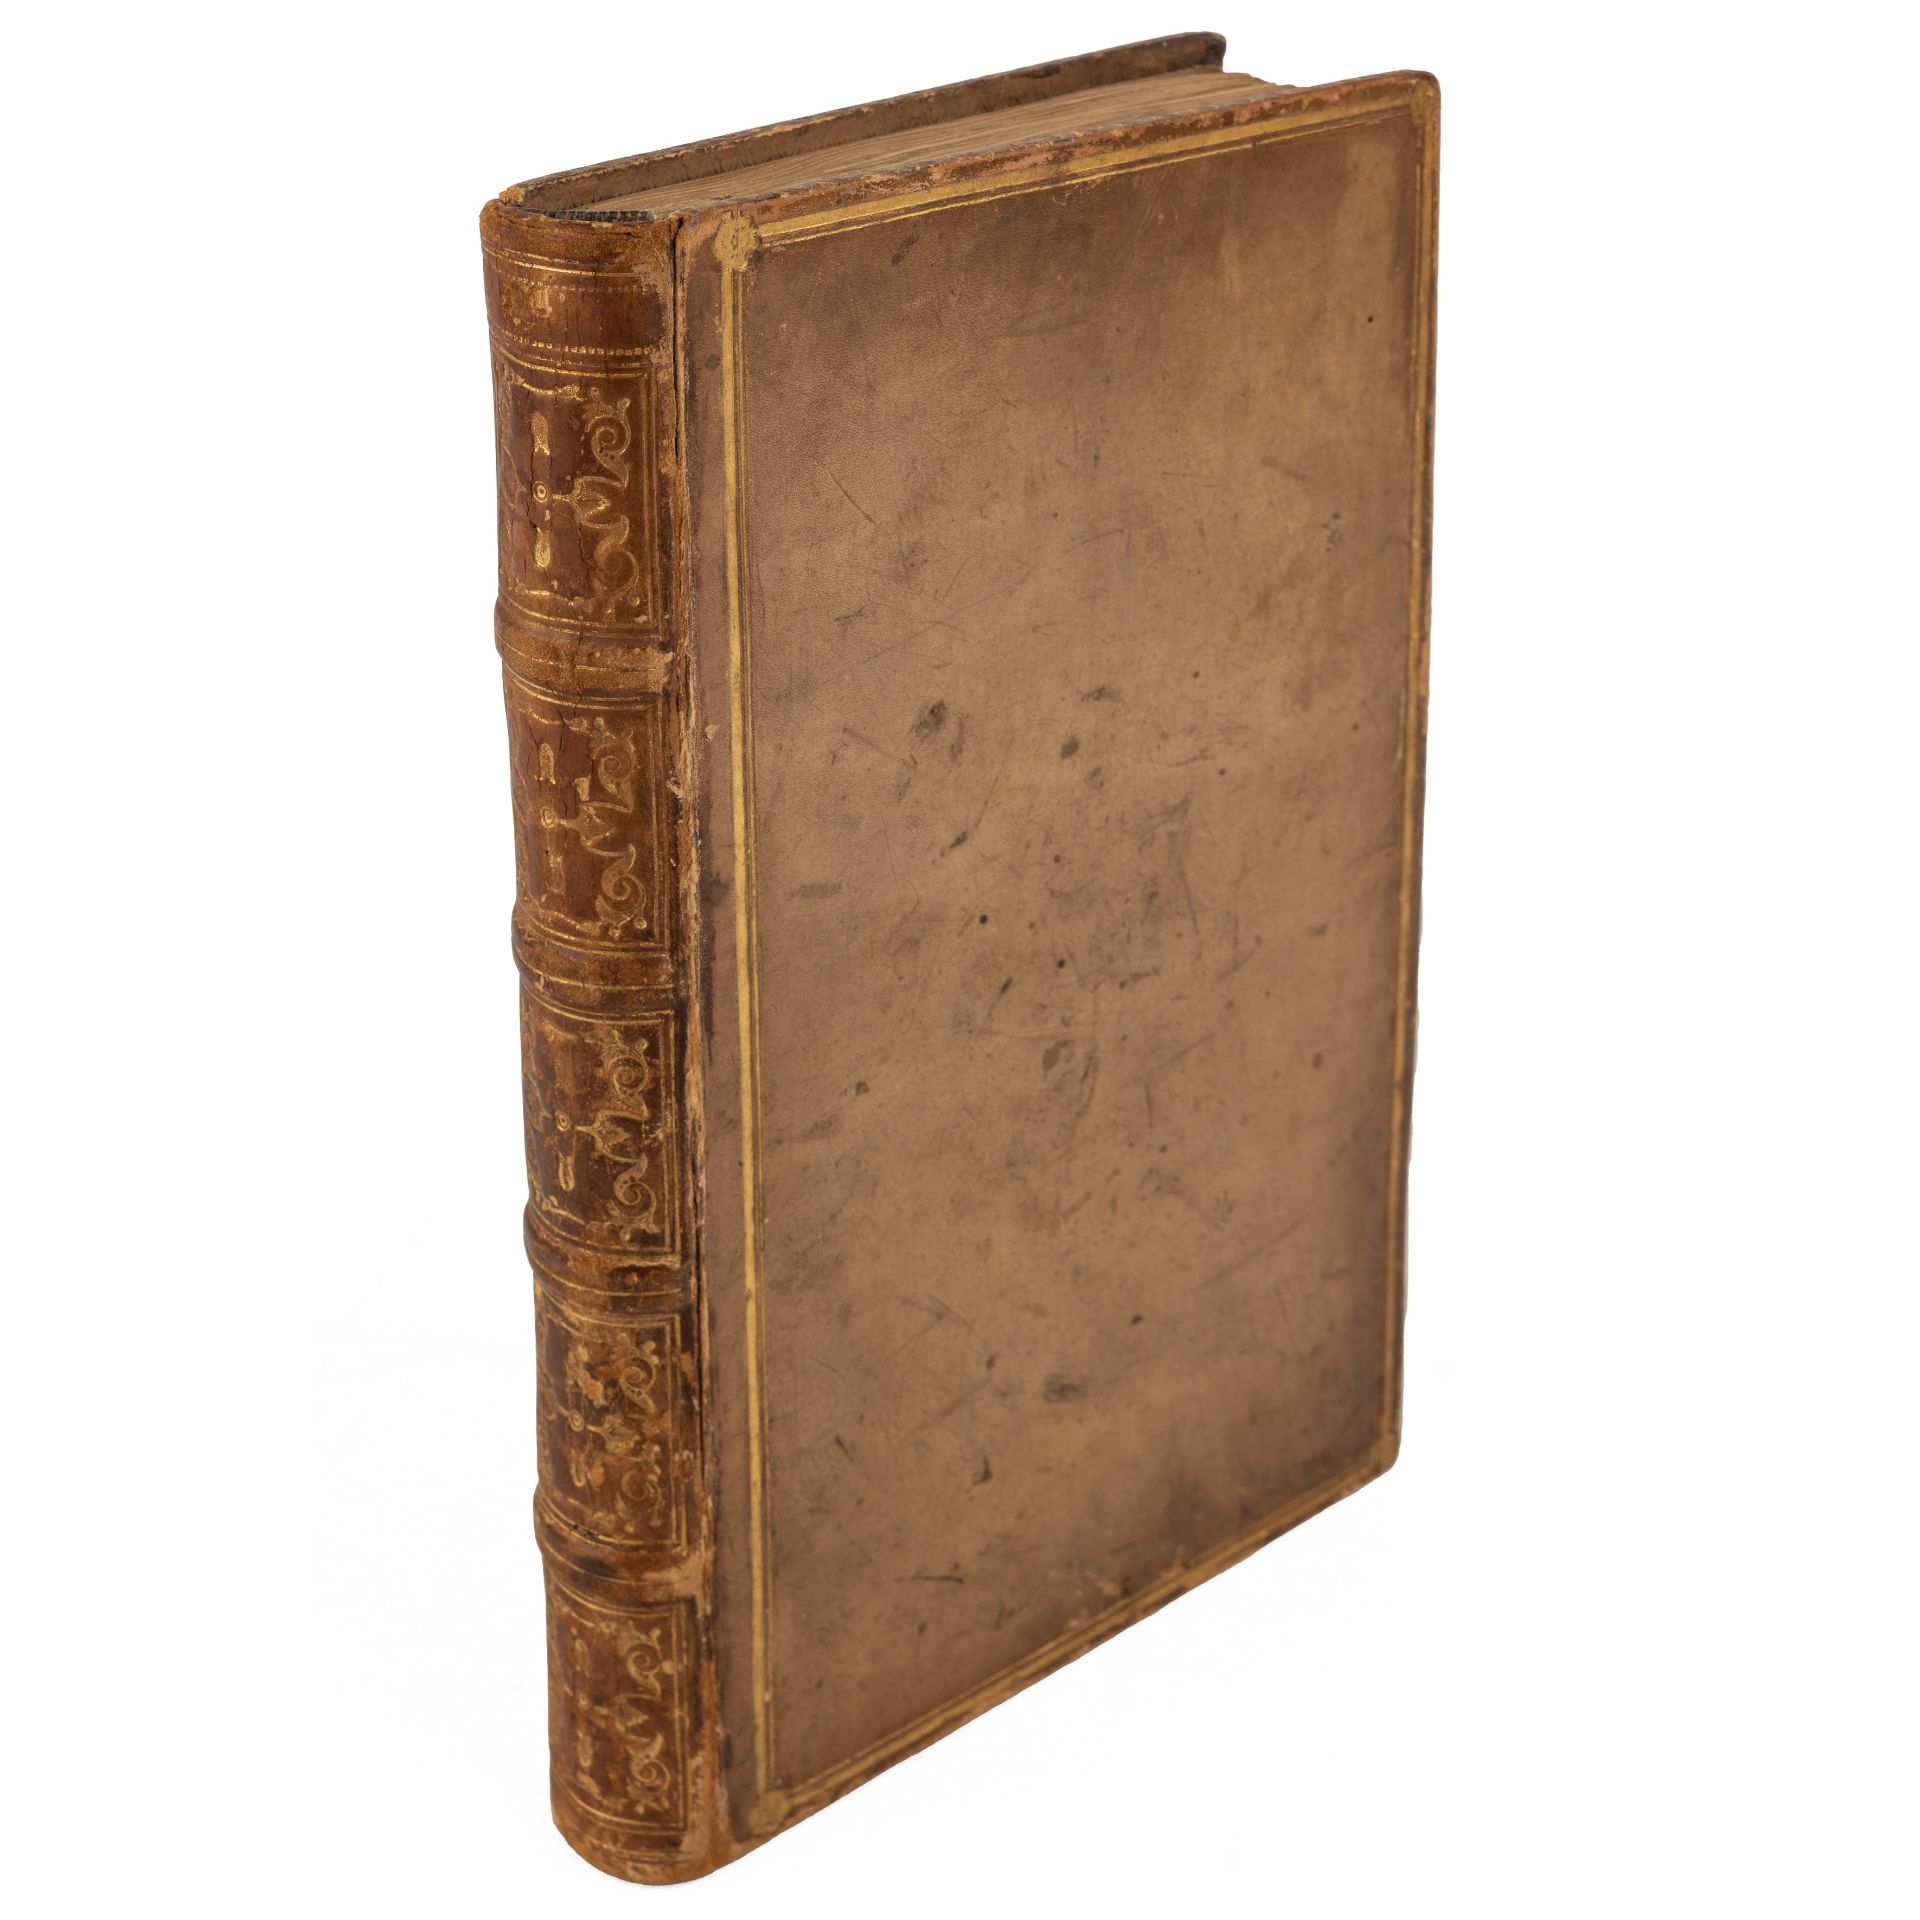 A 19th century manuscript and scrap diary describing travels between Amiens and Fuenterrabia (